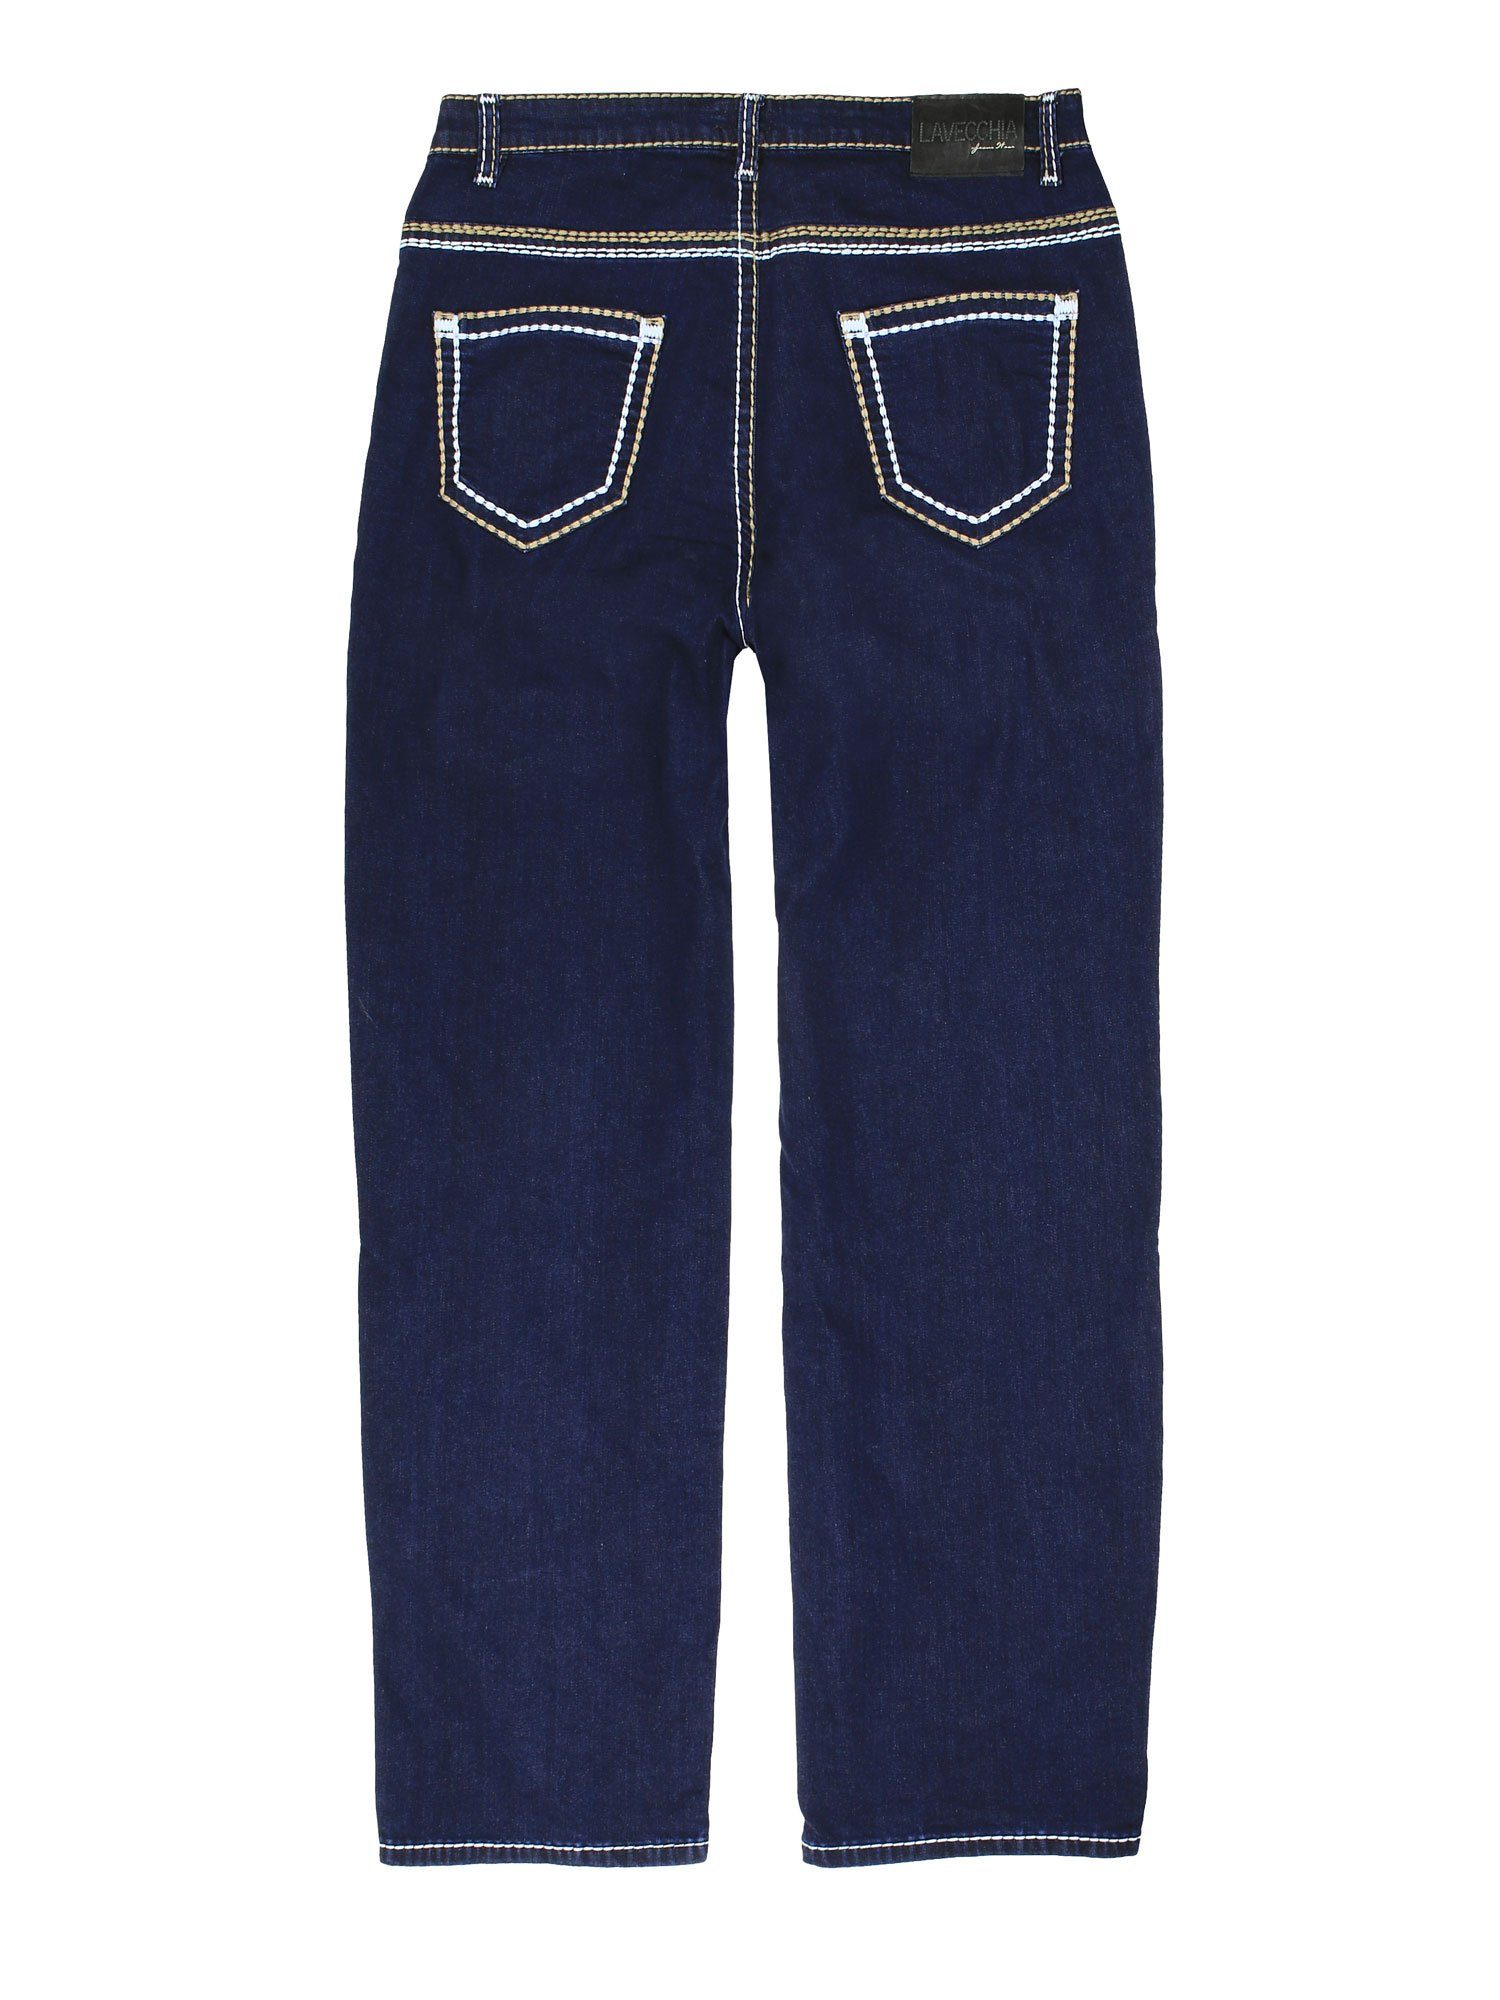 Herren Comfort-fit-Jeans Elasthan & dicker Lavecchia Übergrößen LV-503 Jeanshose mit Naht dunkelblau Stretch